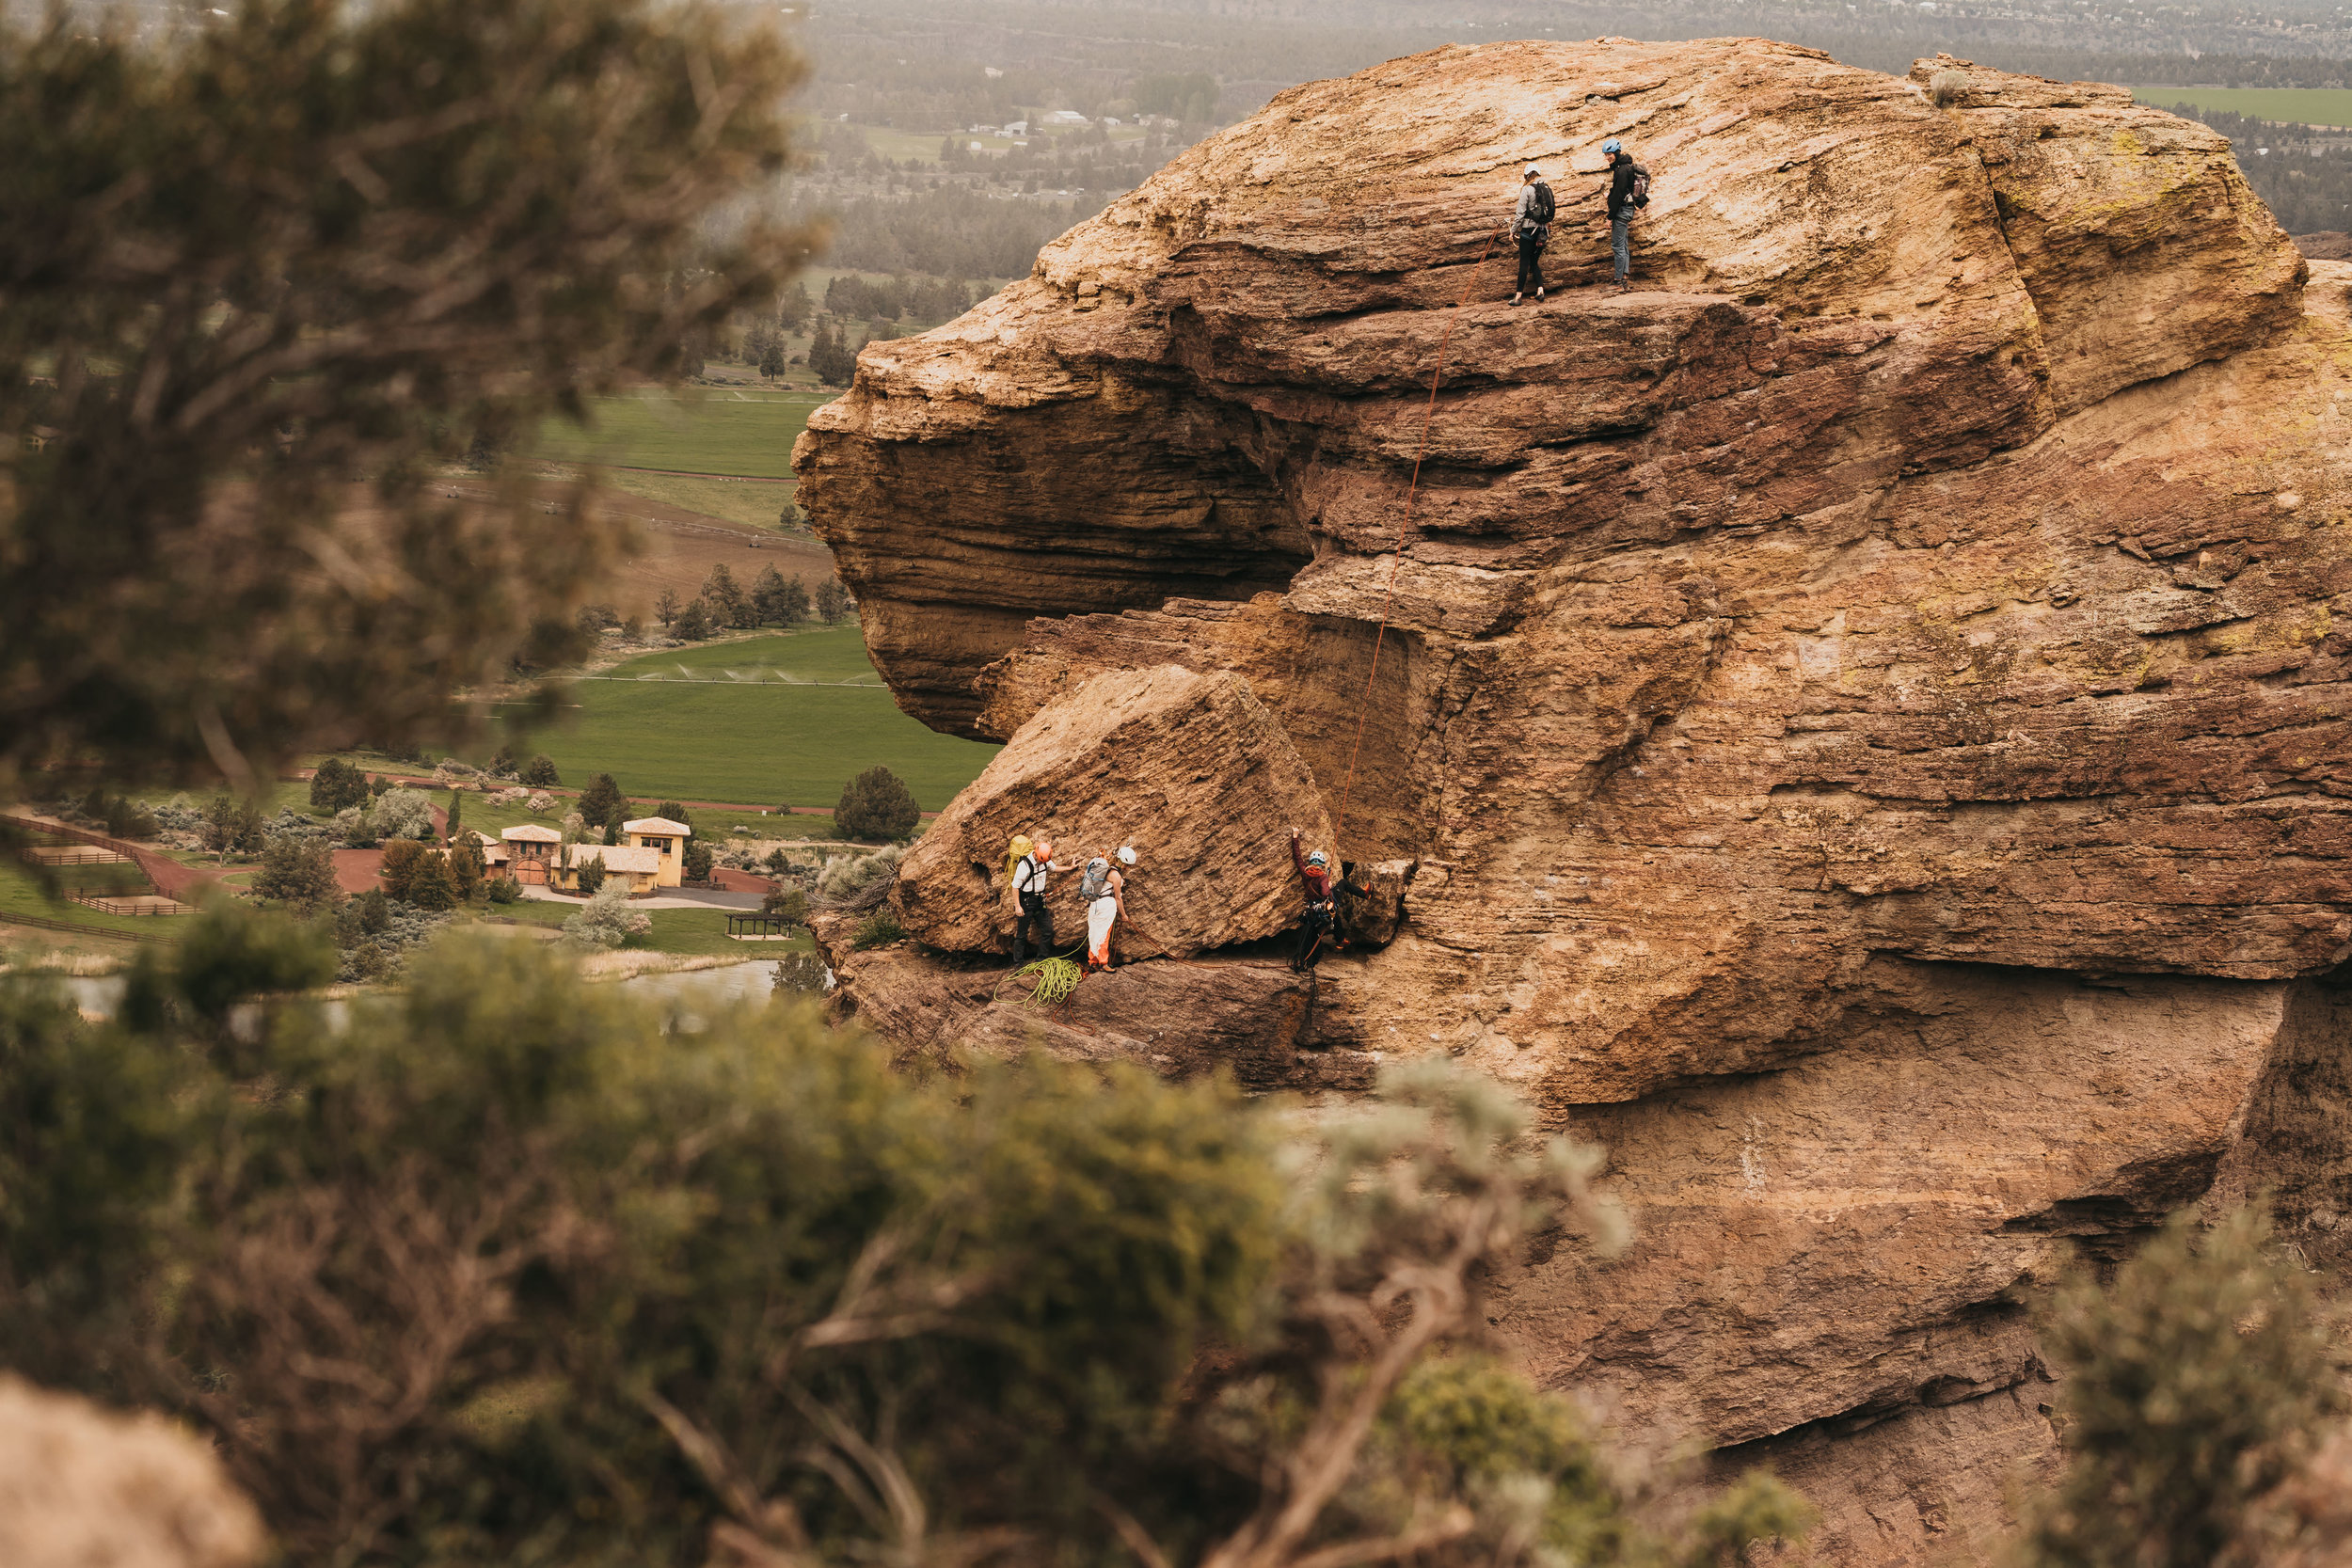 Smith Rock Rock Climbing Elopement | Between the Pine Adventure Elopement Photography